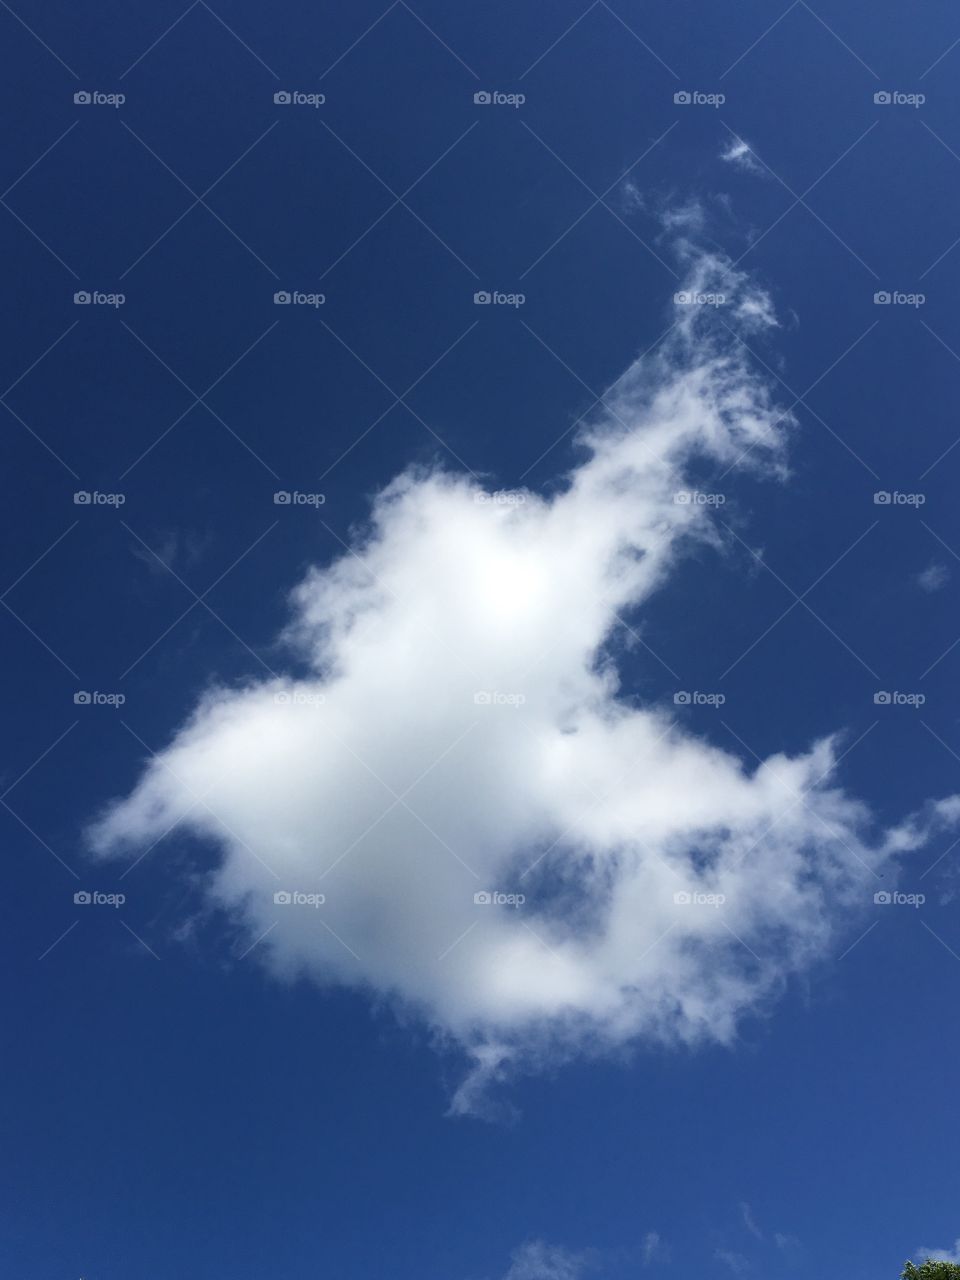 Cloud in the sky 